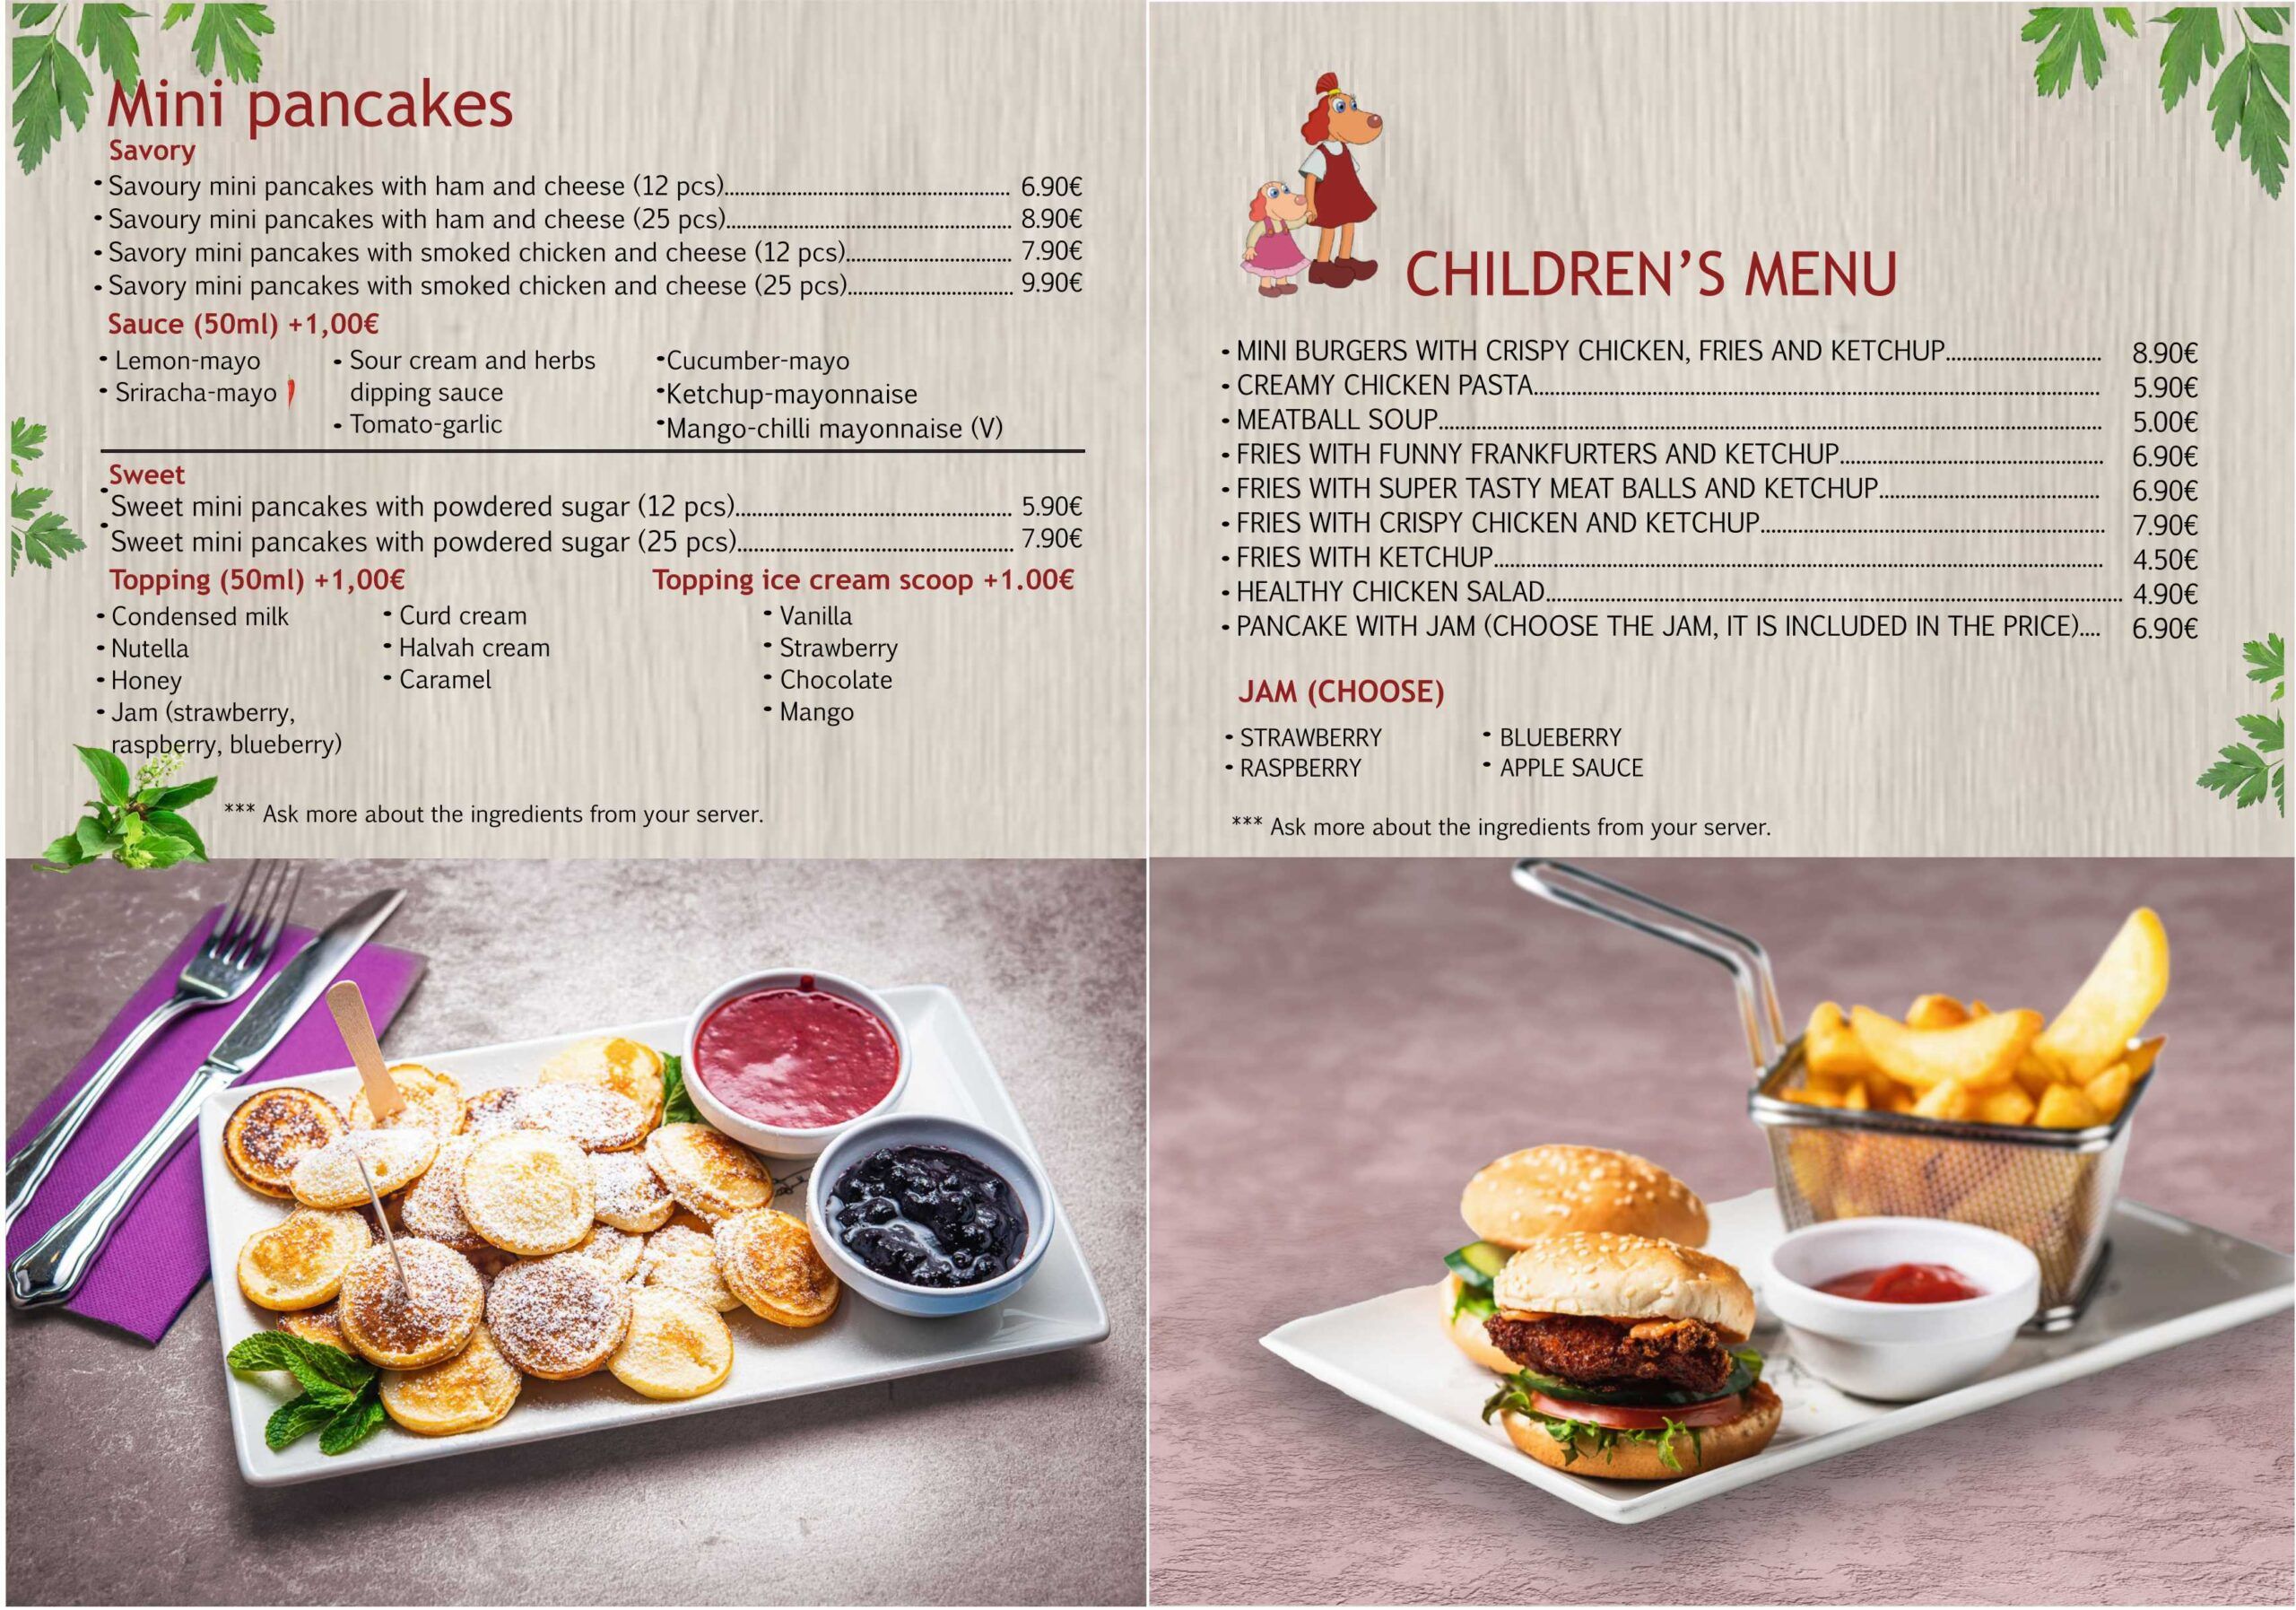 Mini pancakes, children's menu